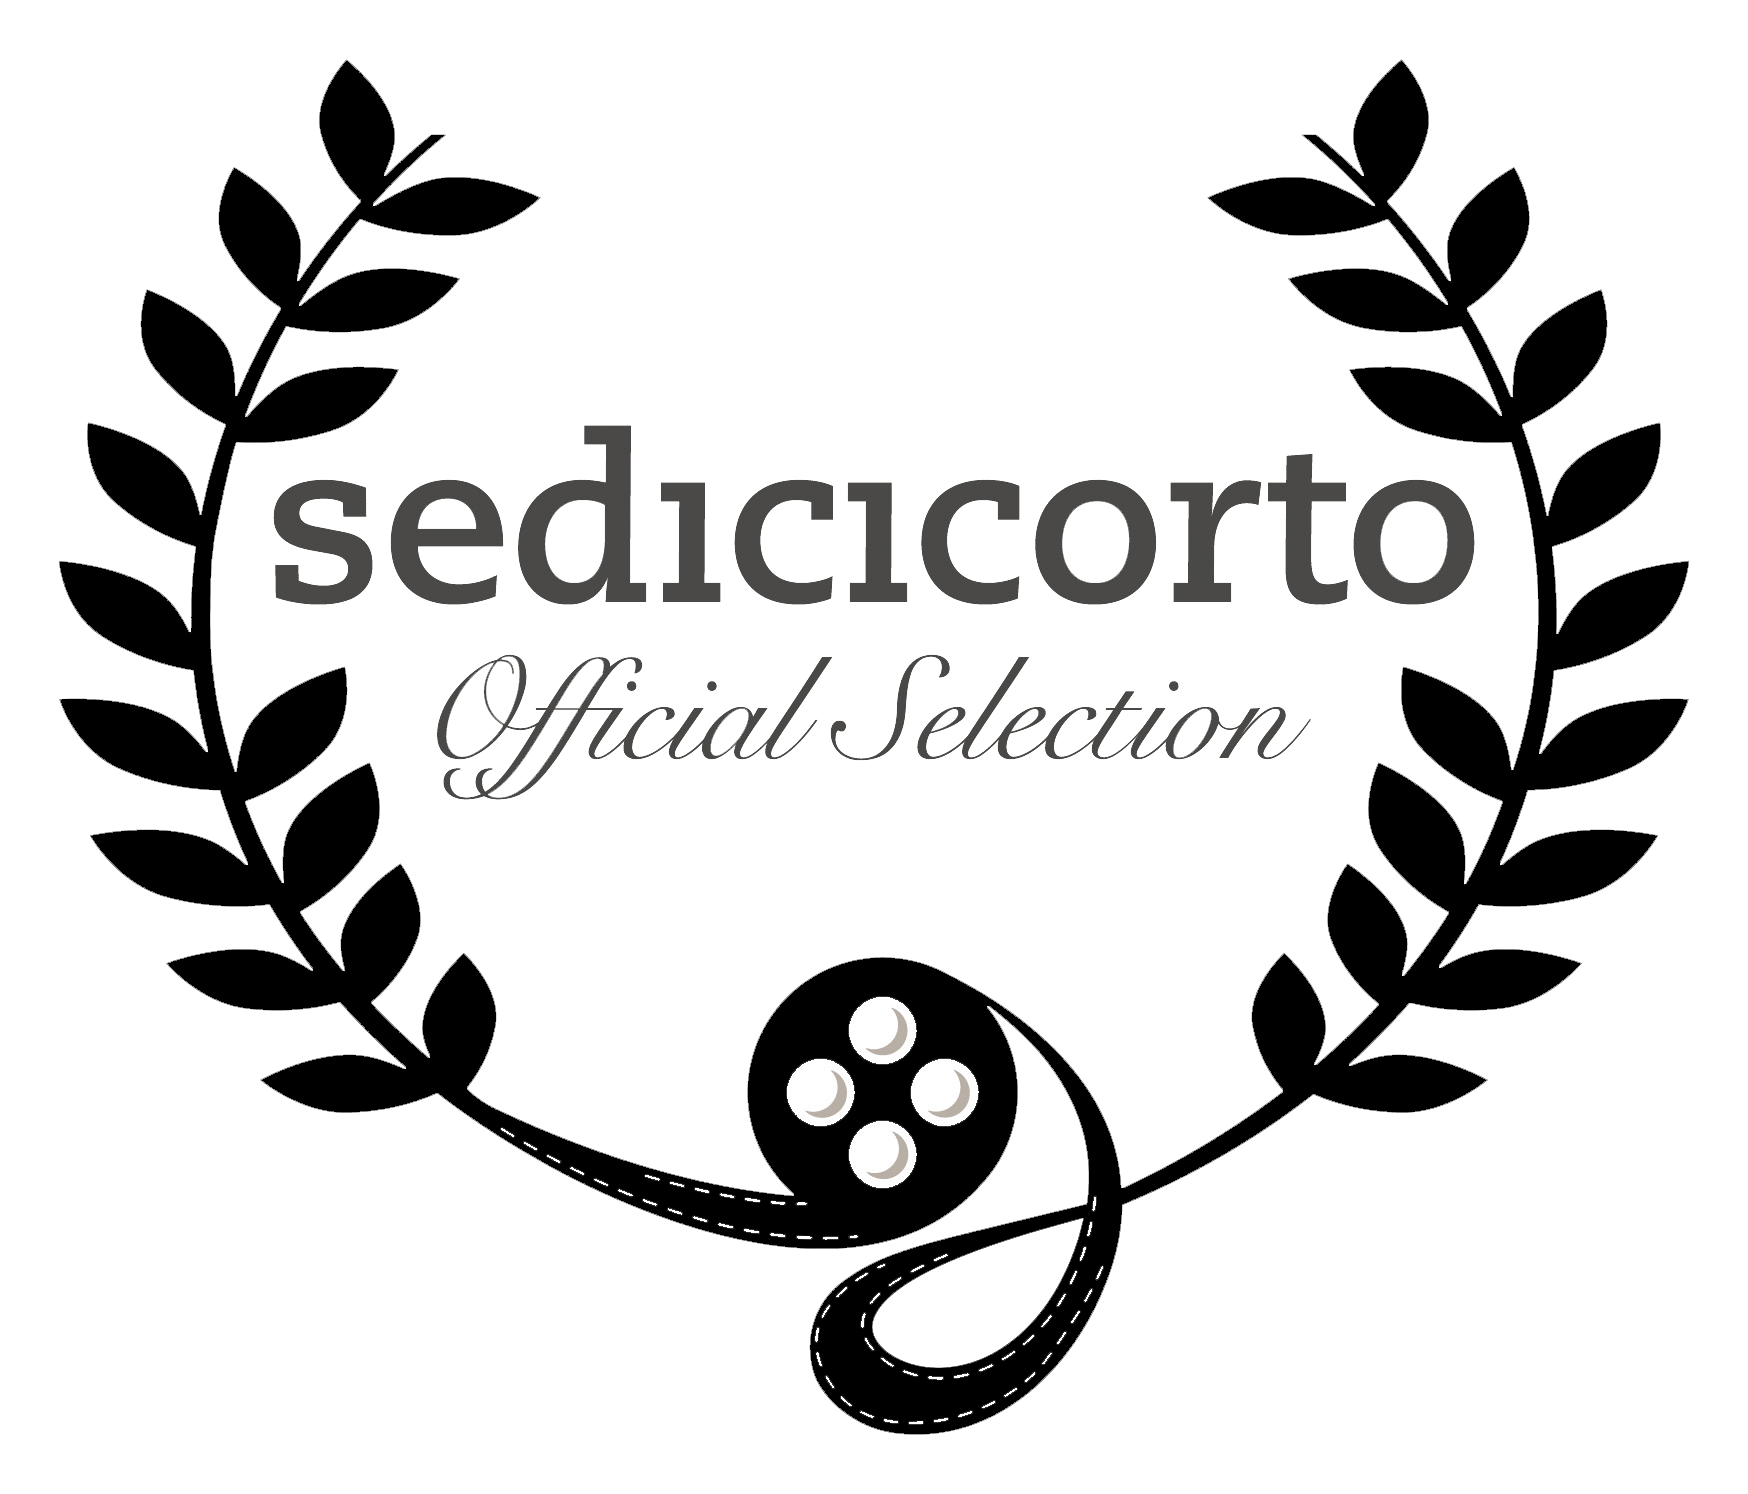 Official selection: sedicicorto